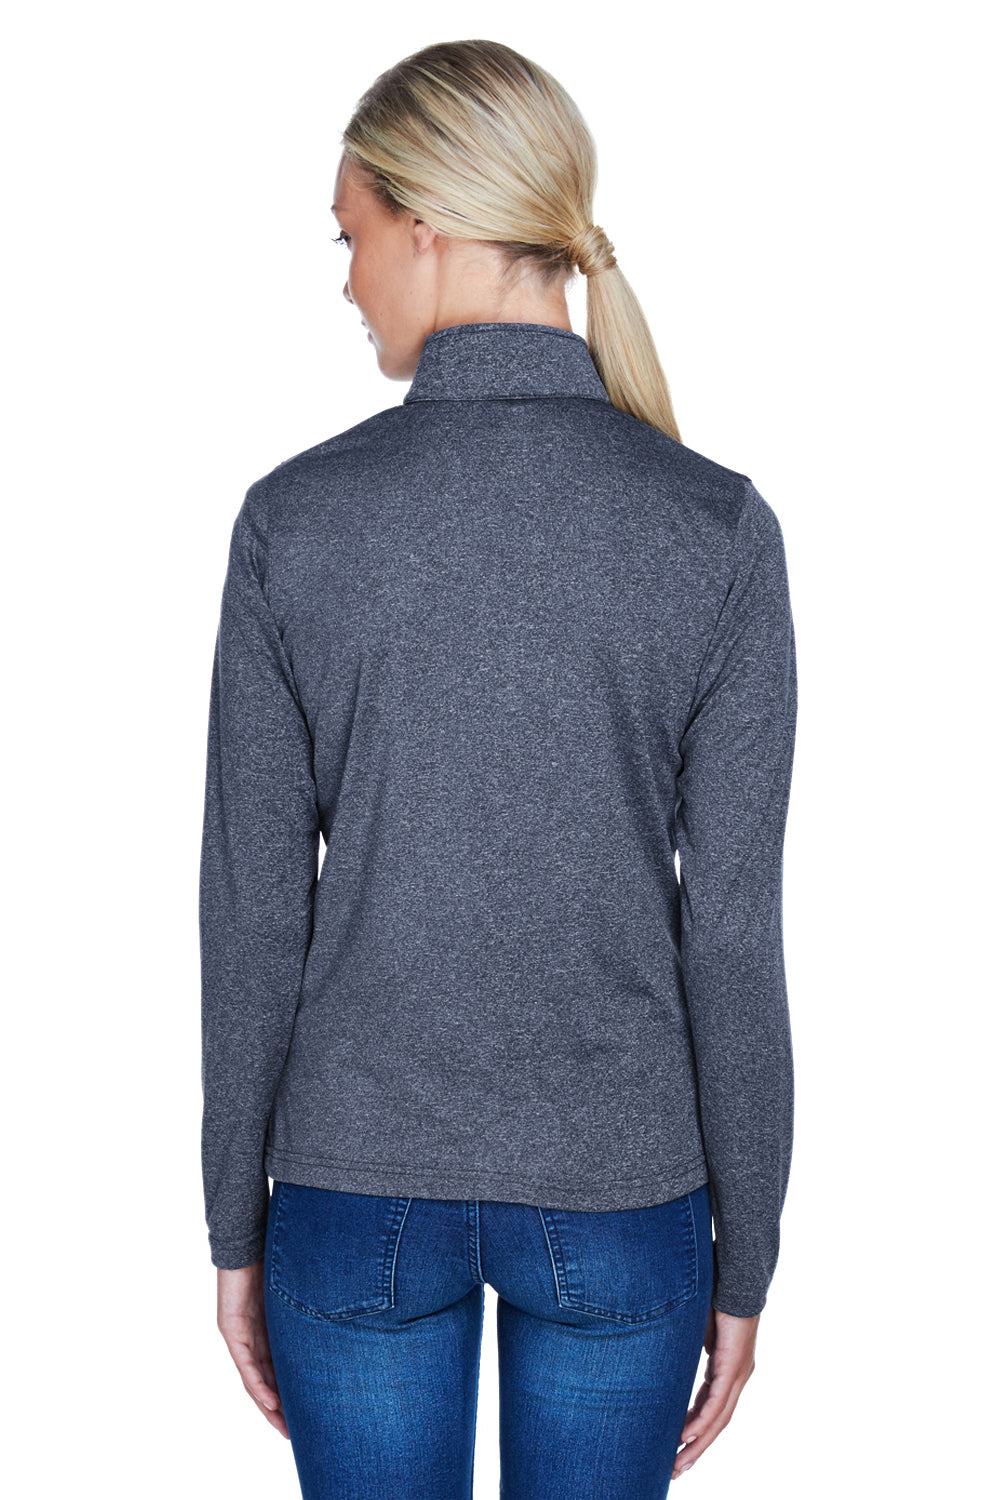 UltraClub 8618W Womens Heather Cool & Dry Performance Moisture Wicking 1/4 Zip Sweatshirt Navy Blue Back